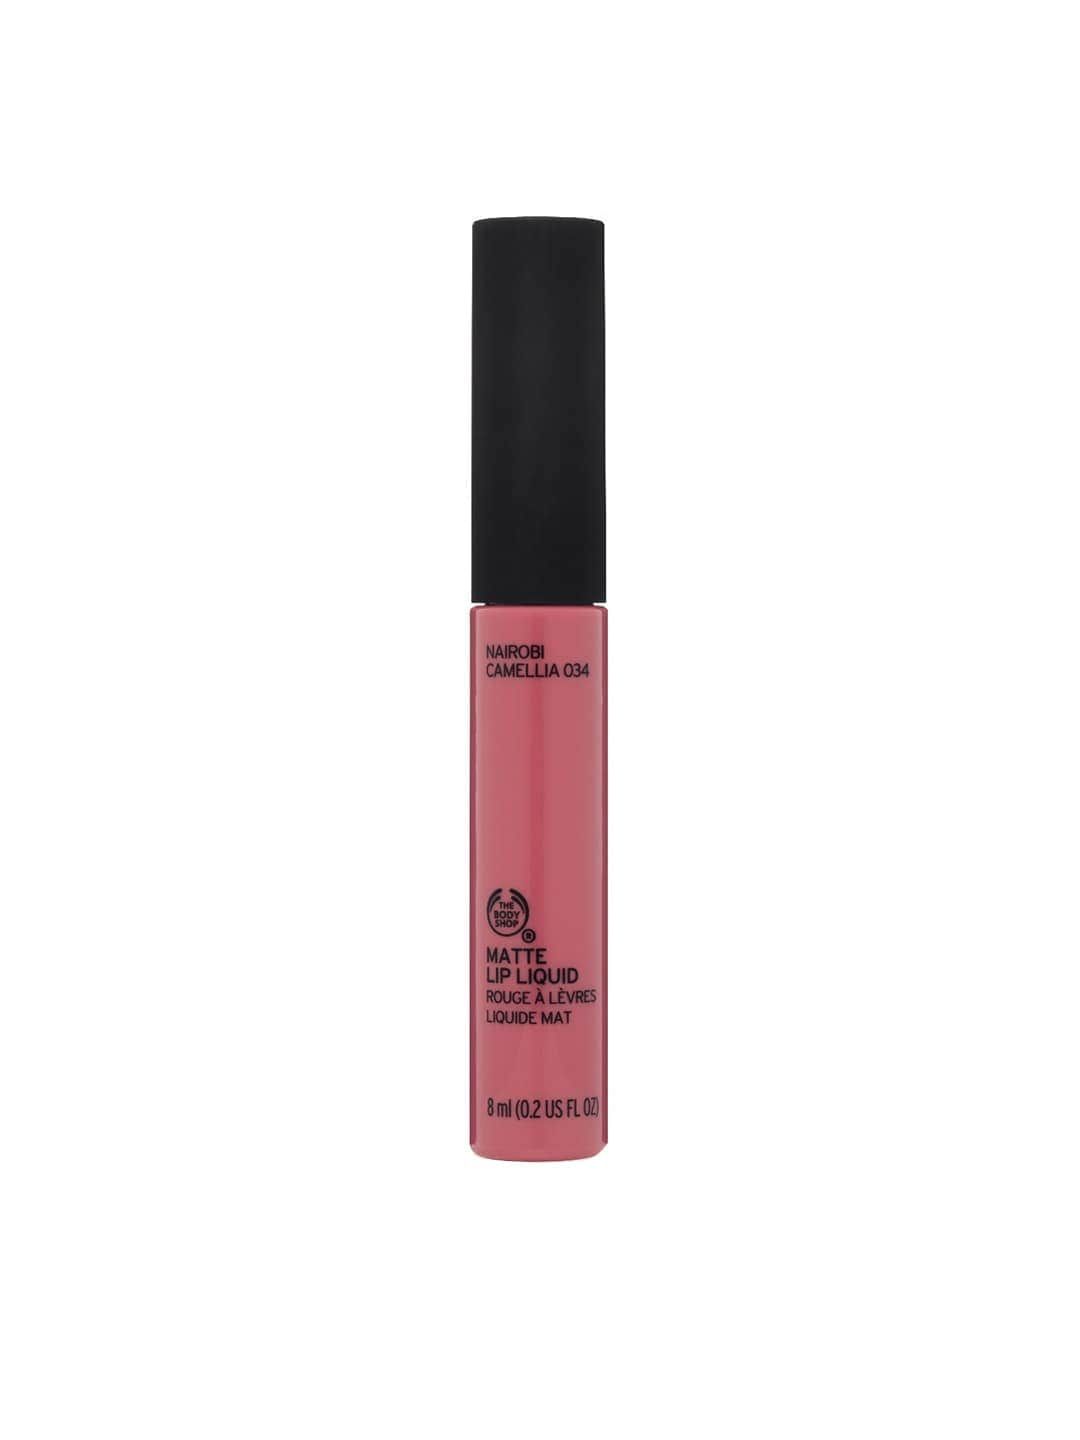 THE BODY SHOP Matte Sustainable Lip Liquid - Pink Nairobi Camellia 034 Price in India